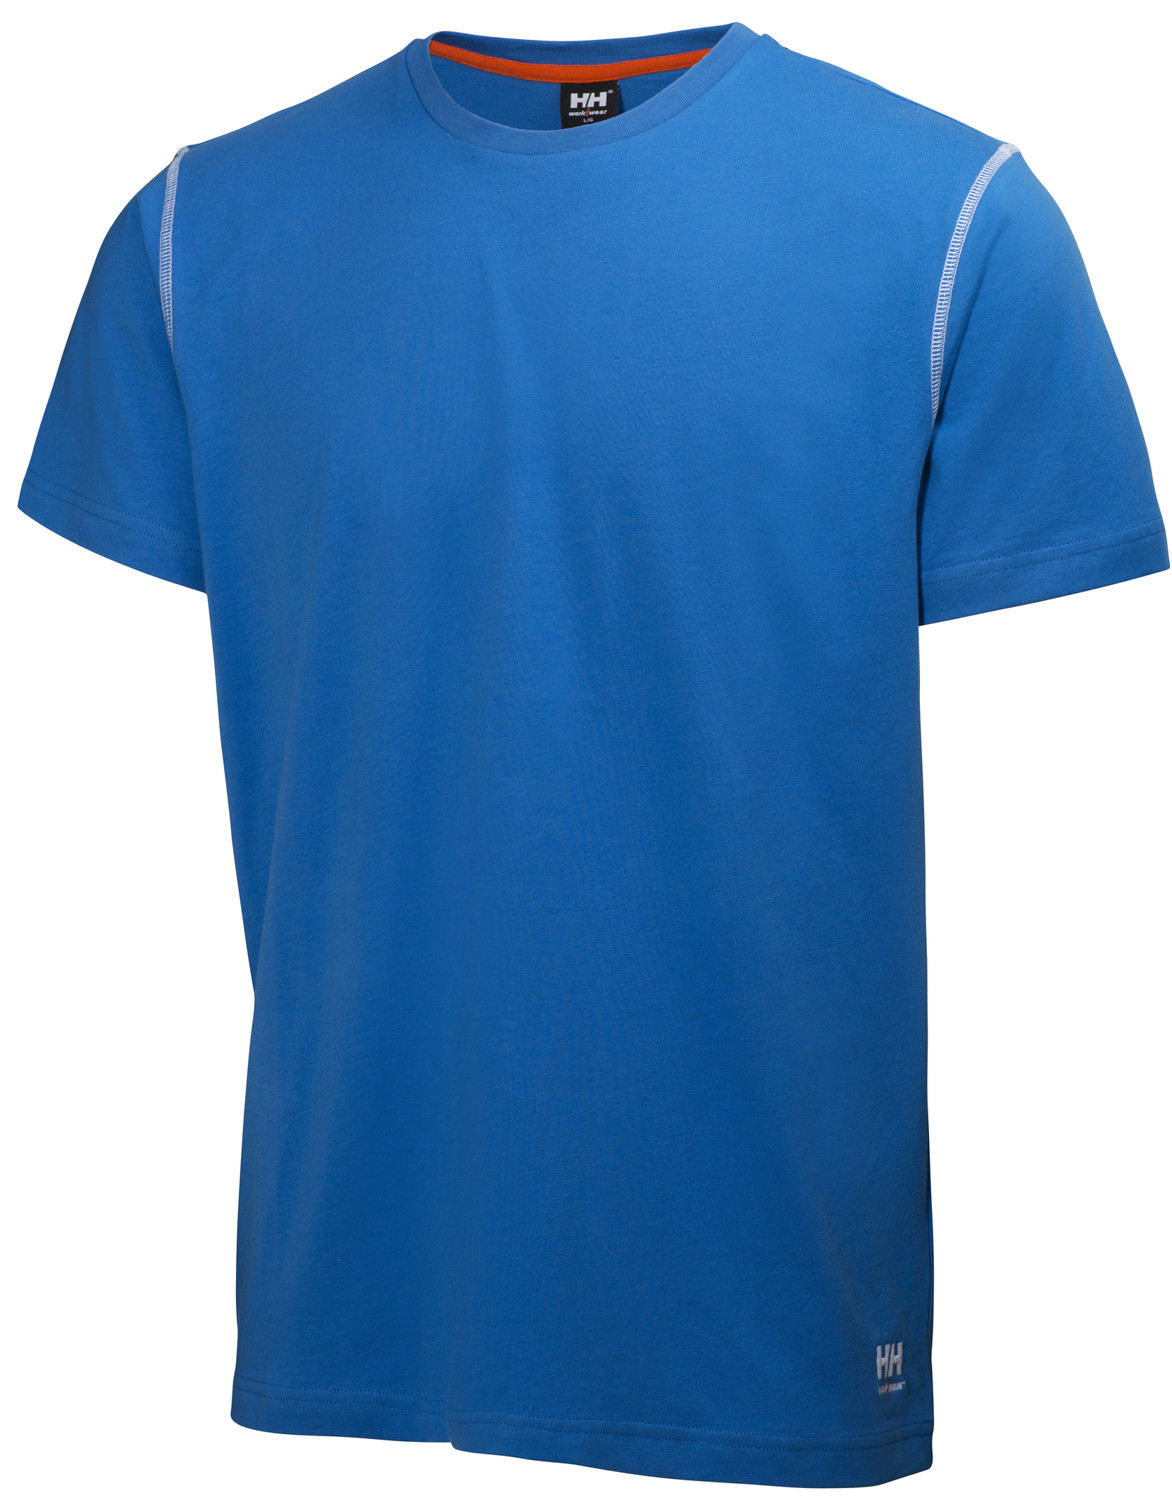 Футболка Helly Hansen Oxford T-Shirt - 79024 (Racer Blue, L)